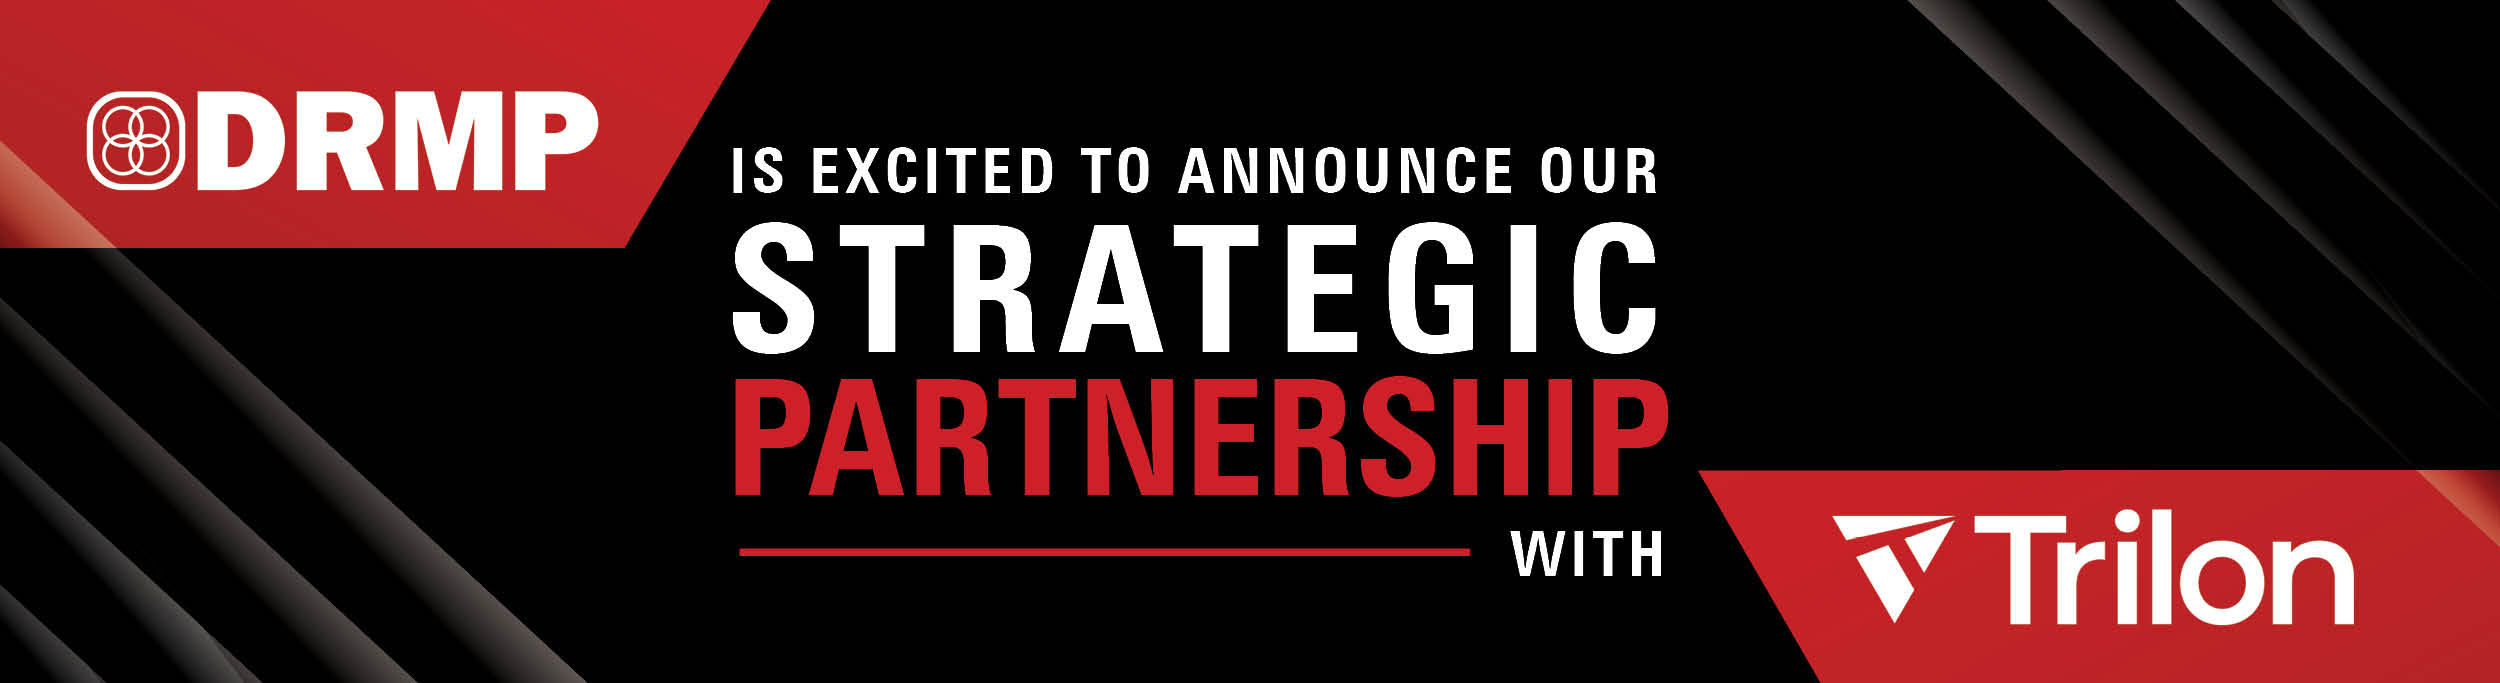 DRMP Ewire Featured Story - DRMP Announces Strategic Growth Partnership with Trilon Group